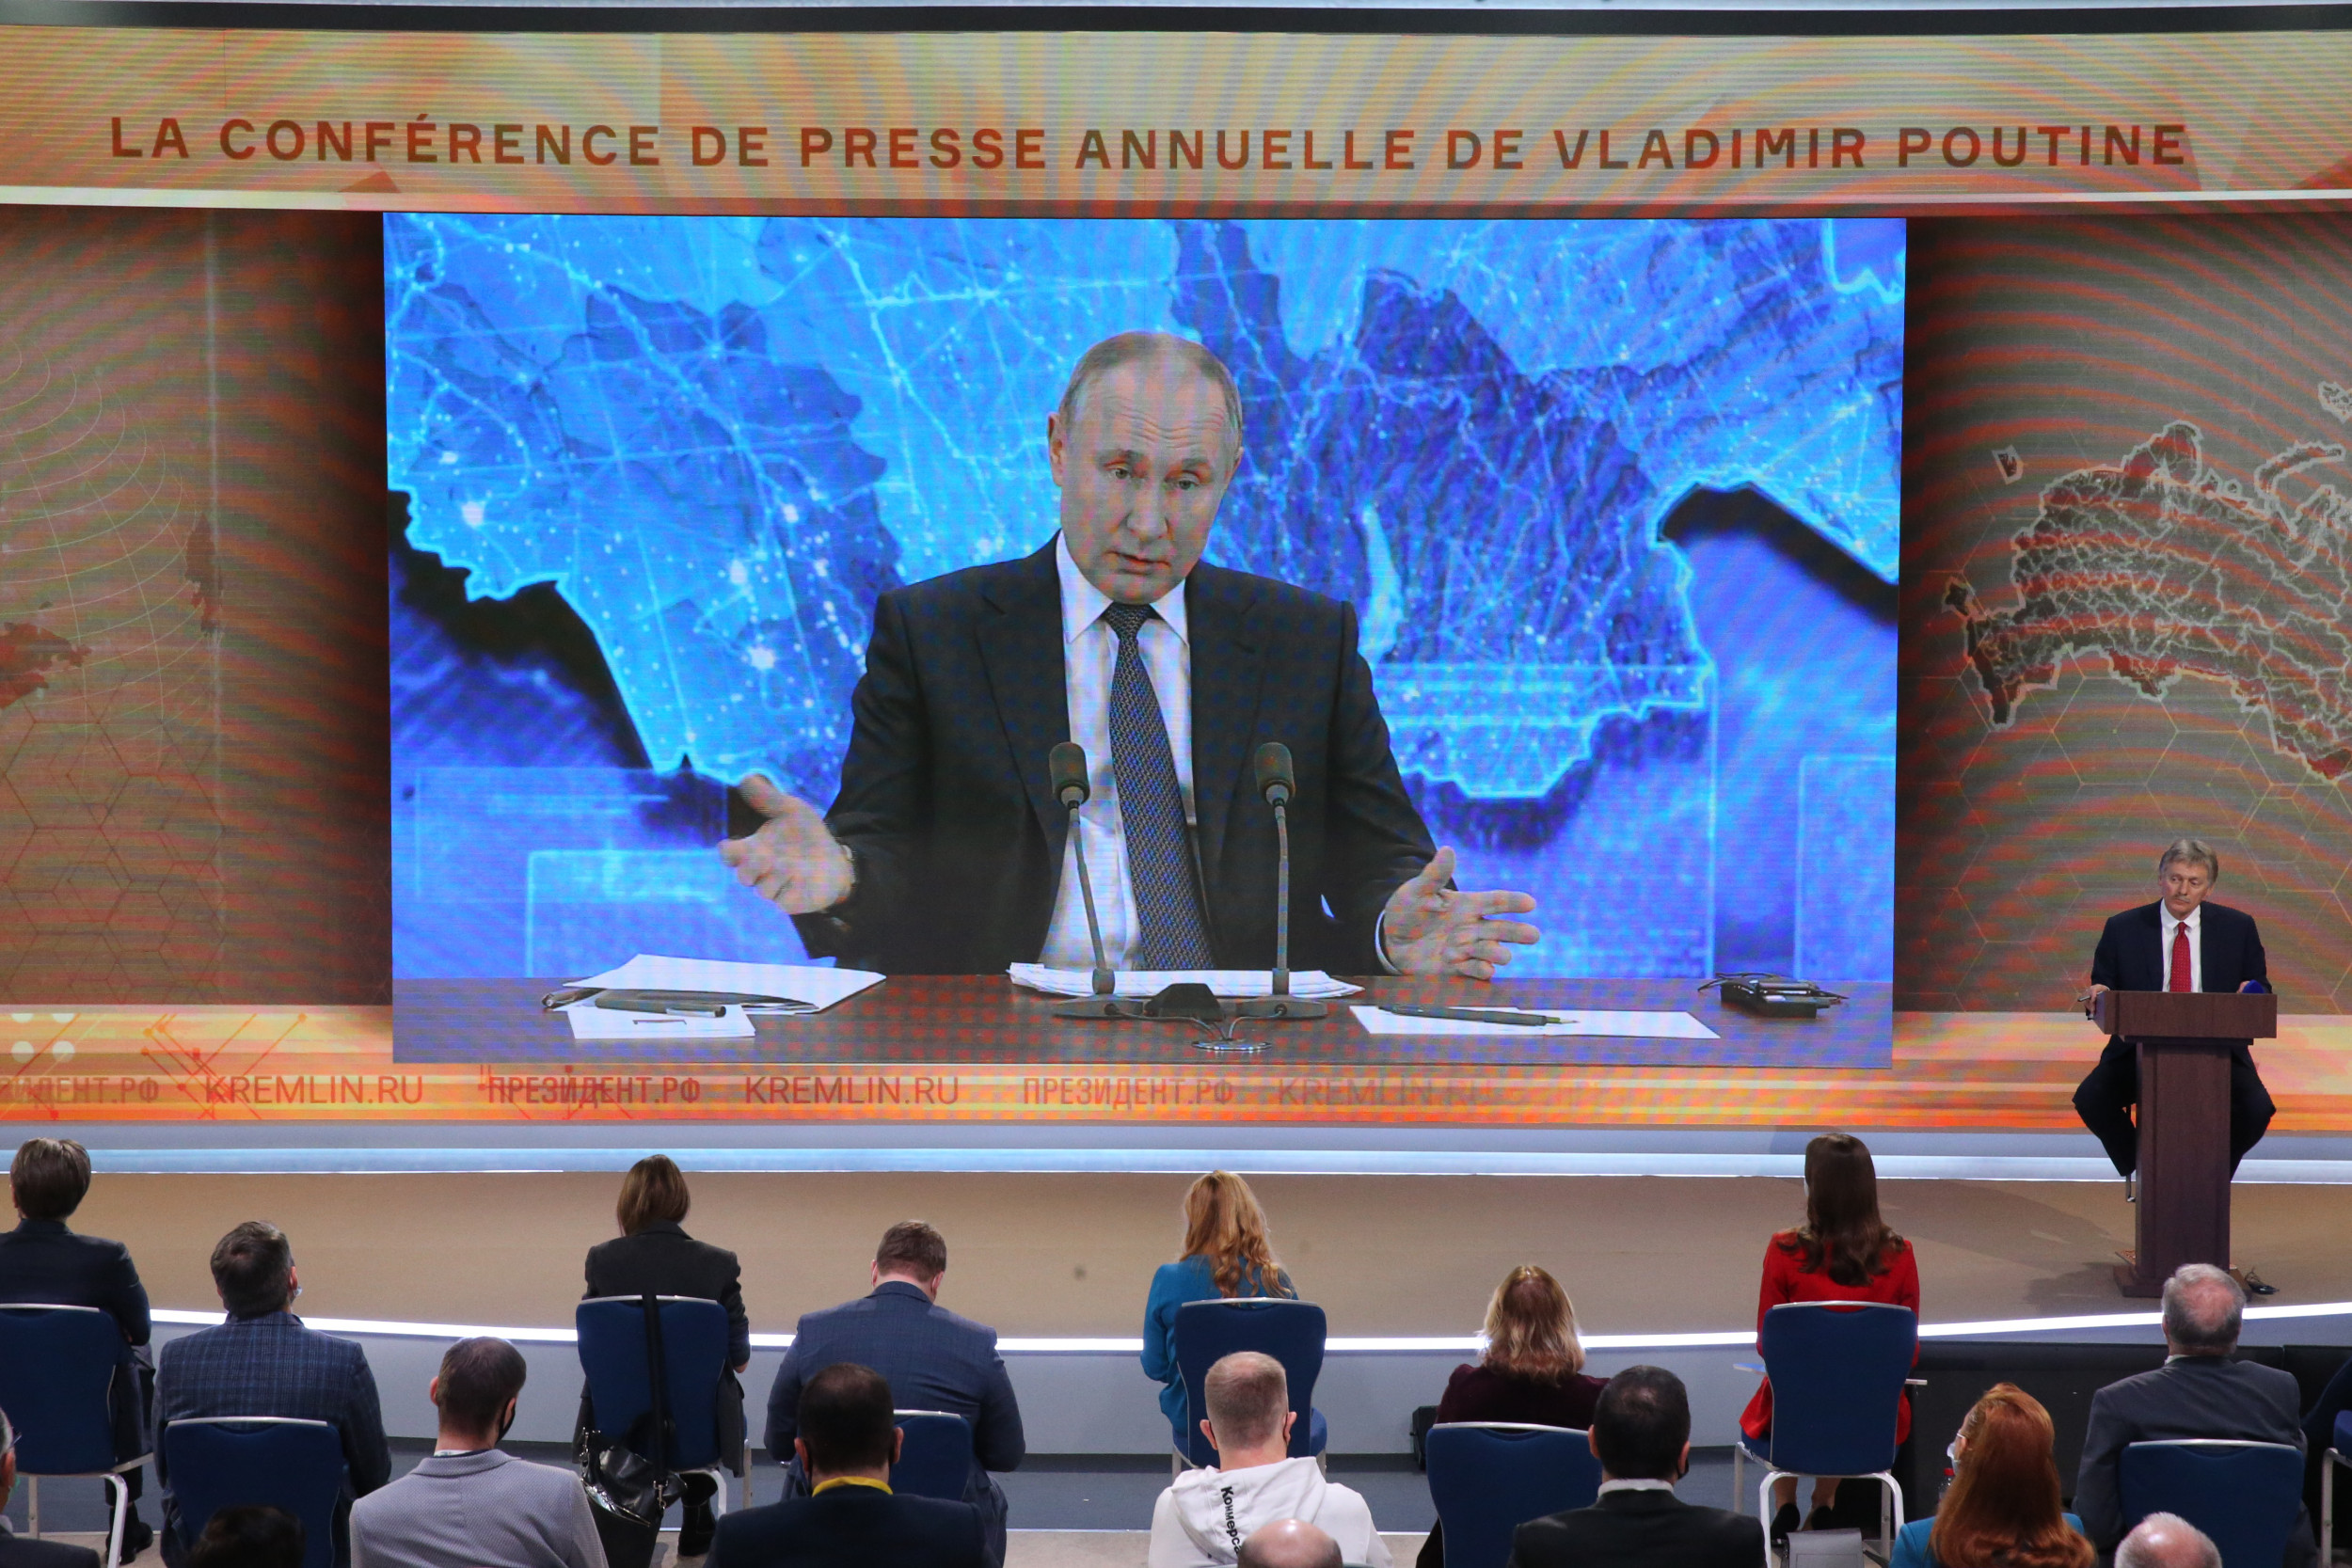 Vladimir Putin addresses the claims of Alexei Navalny’s Mega-Palace, but has not yet said his name